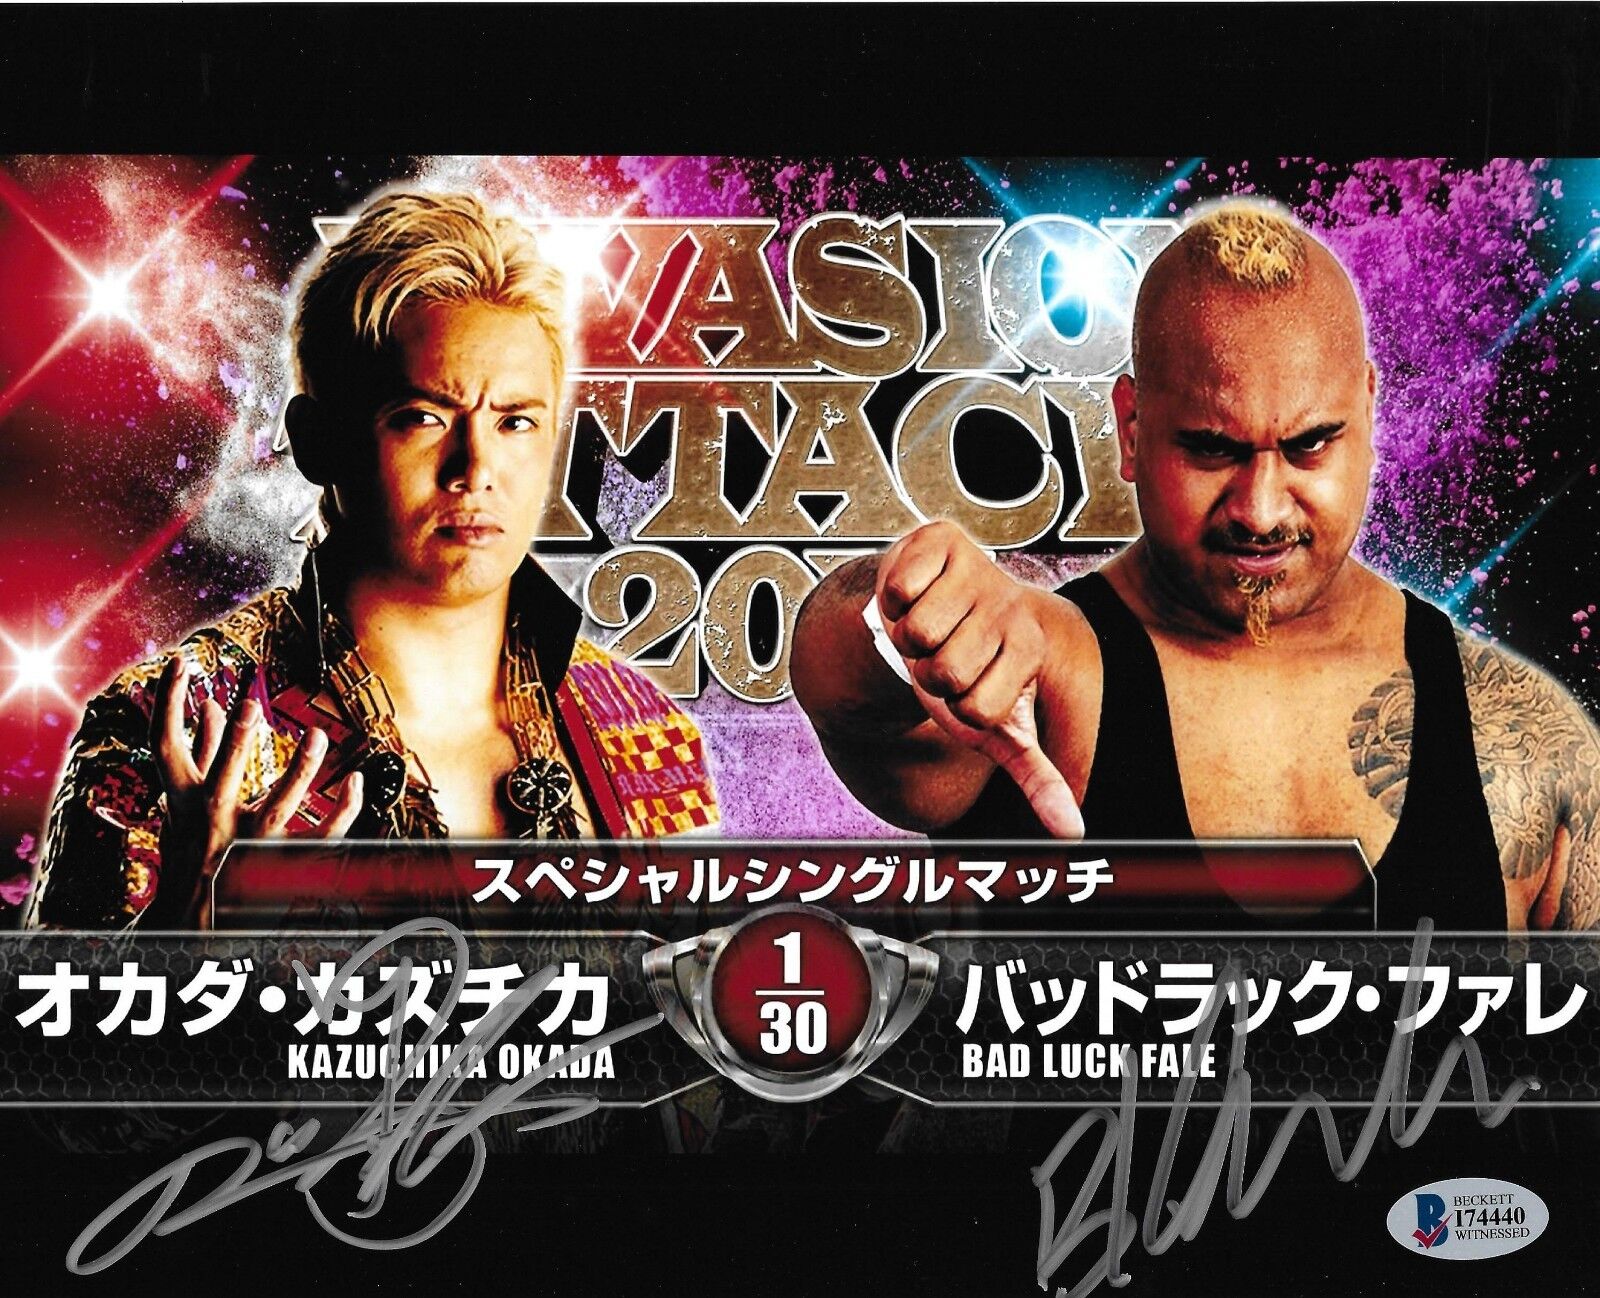 Kazuchika Okada Bad Luck Fale Signed 8x10 Photo Poster painting BAS COA New Japan Pro Wrestling